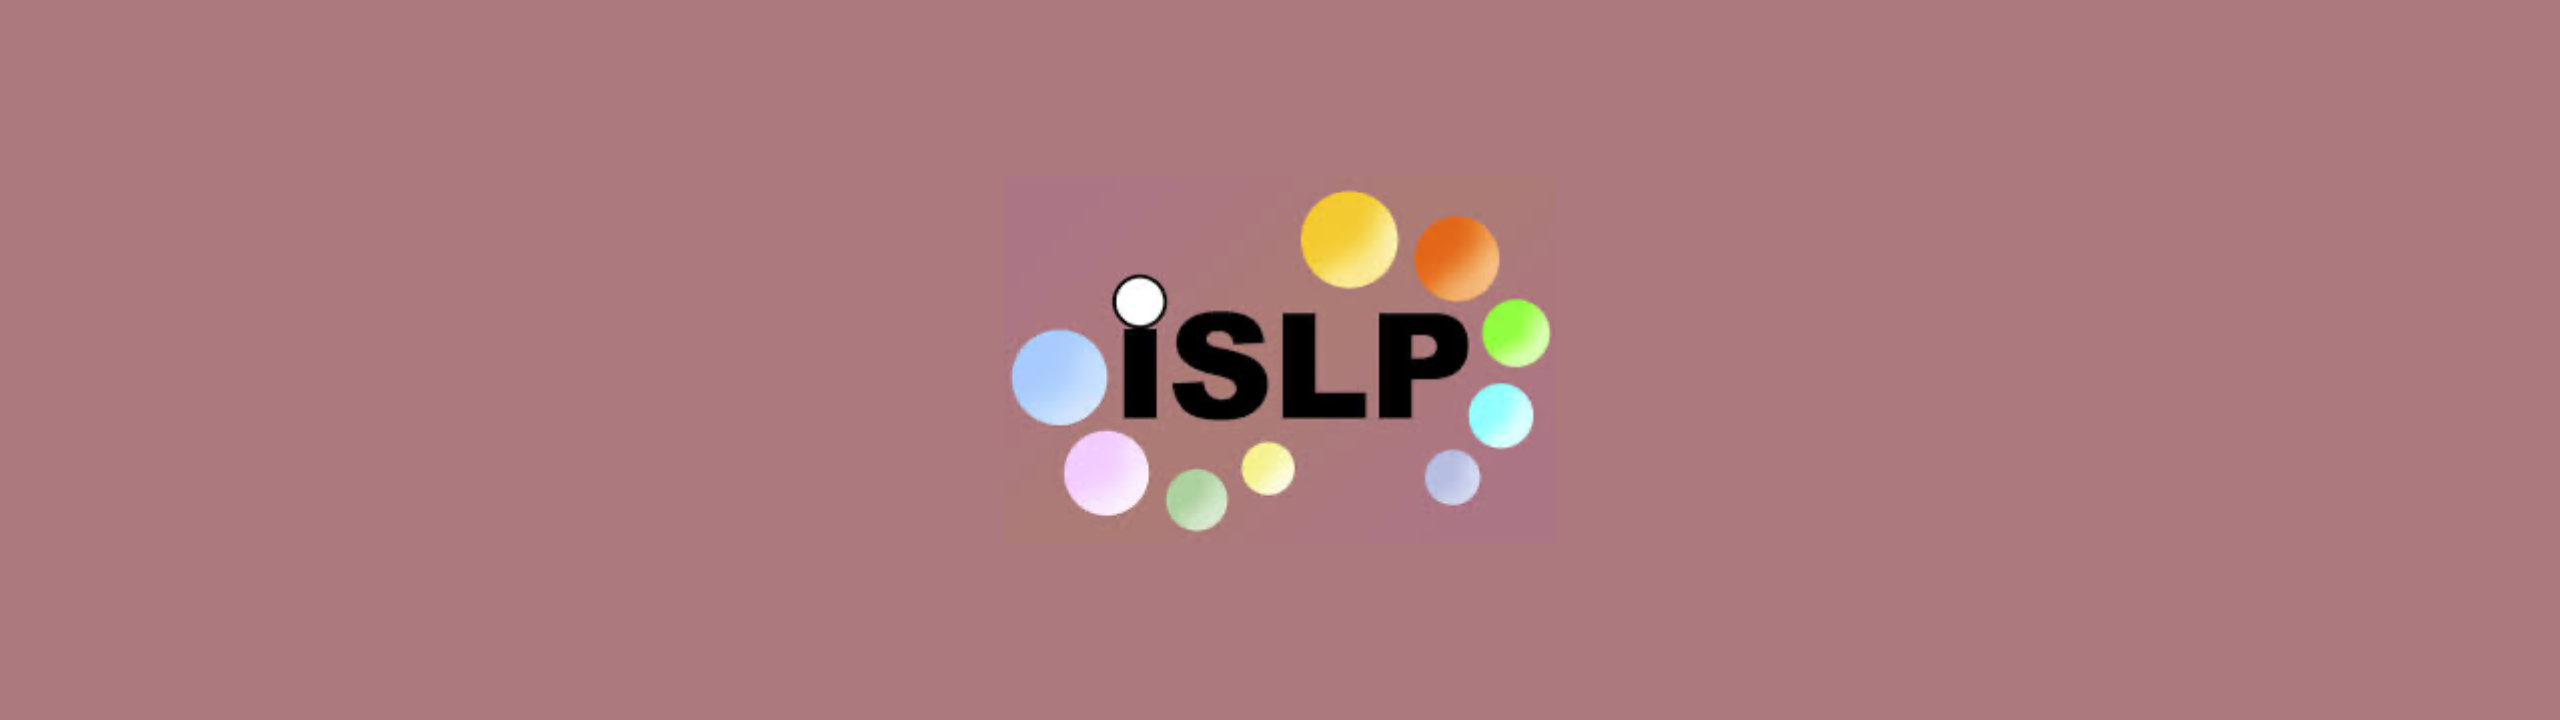 ISLP-Banner